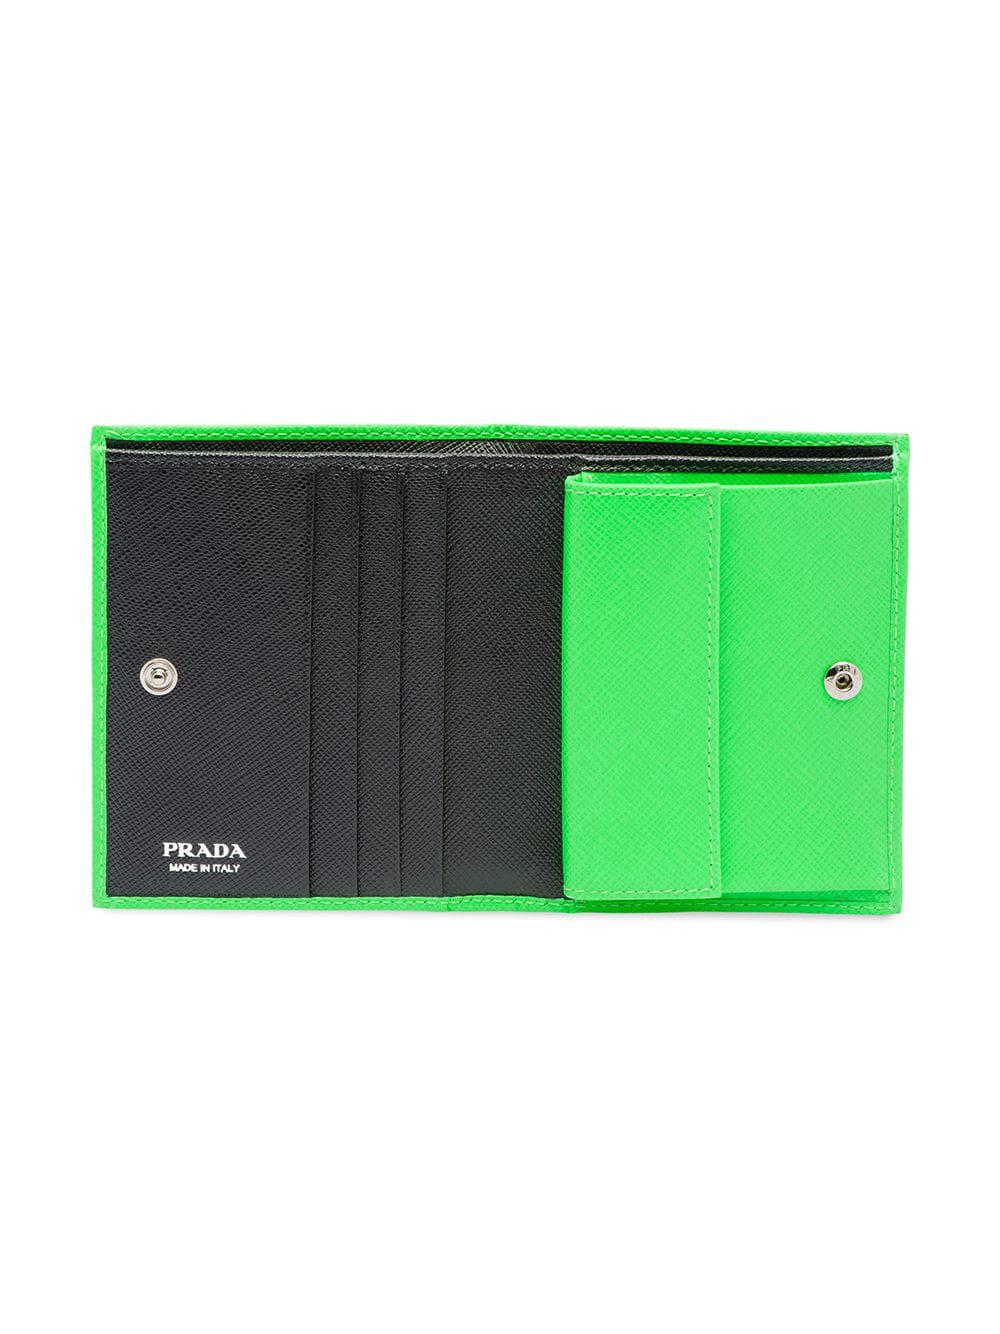 prada wallet green